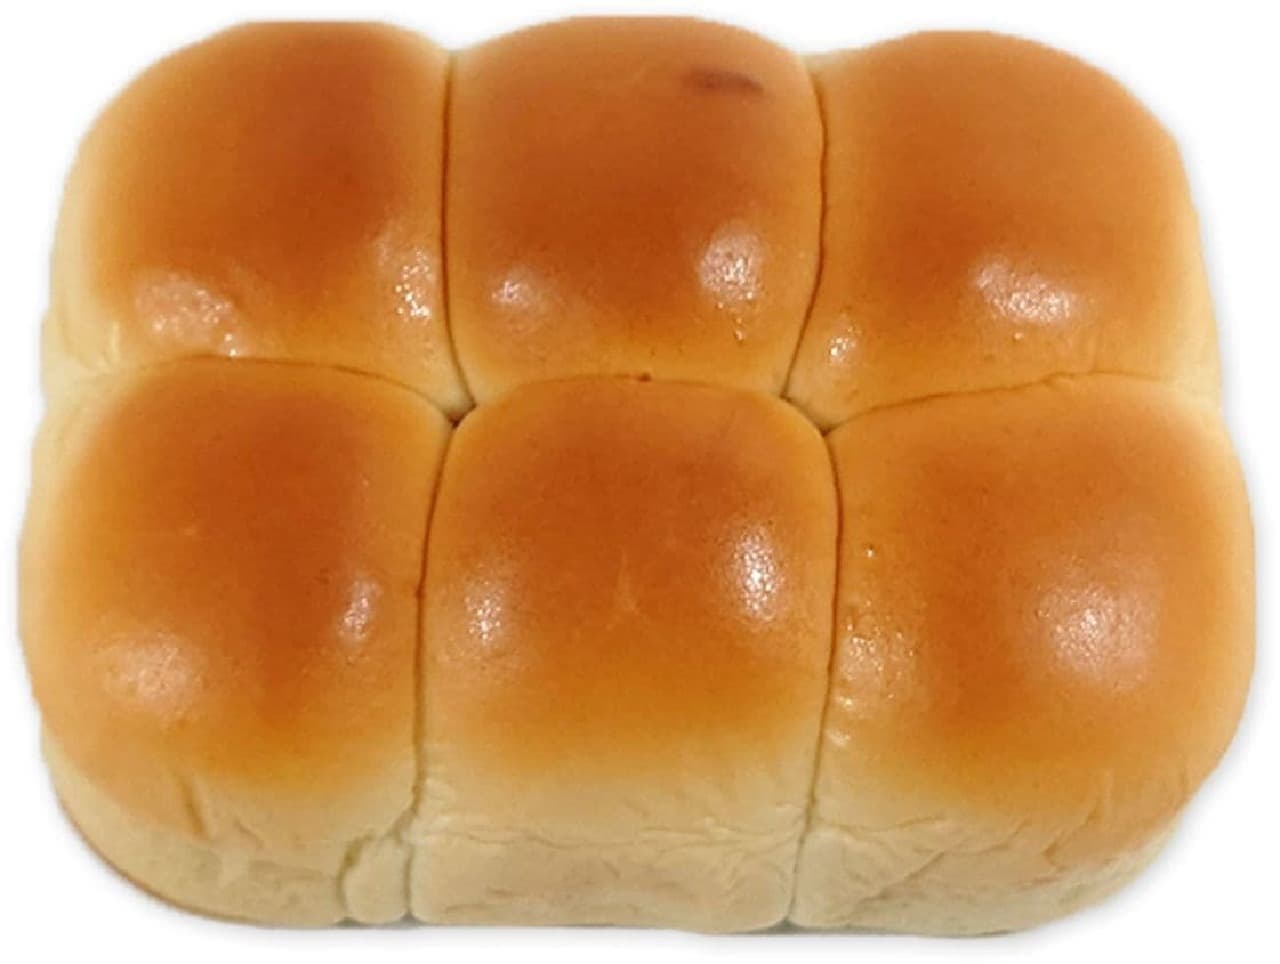 7-ELEVEN "7 Premium 3-Color Bread-Yakiimo, Kabocha, Japanese Chestnut